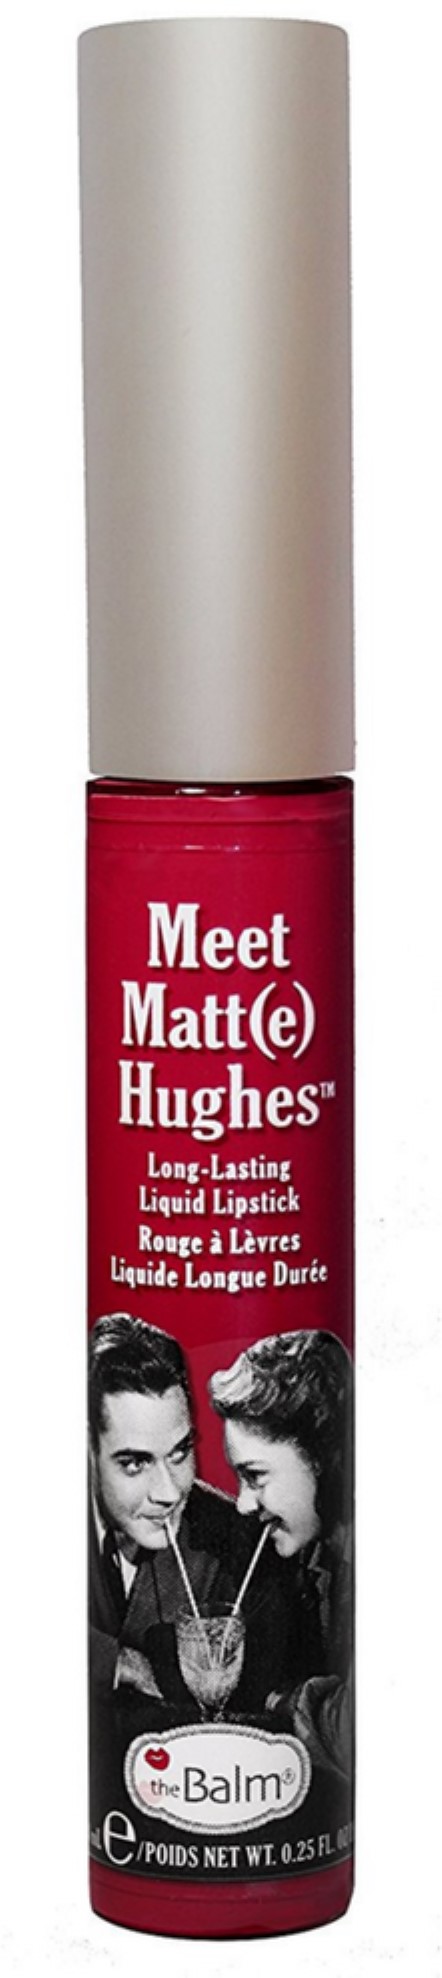 theBalm Meet Matte Hughes Long Lasting Liquid Lipstick - Dedicated